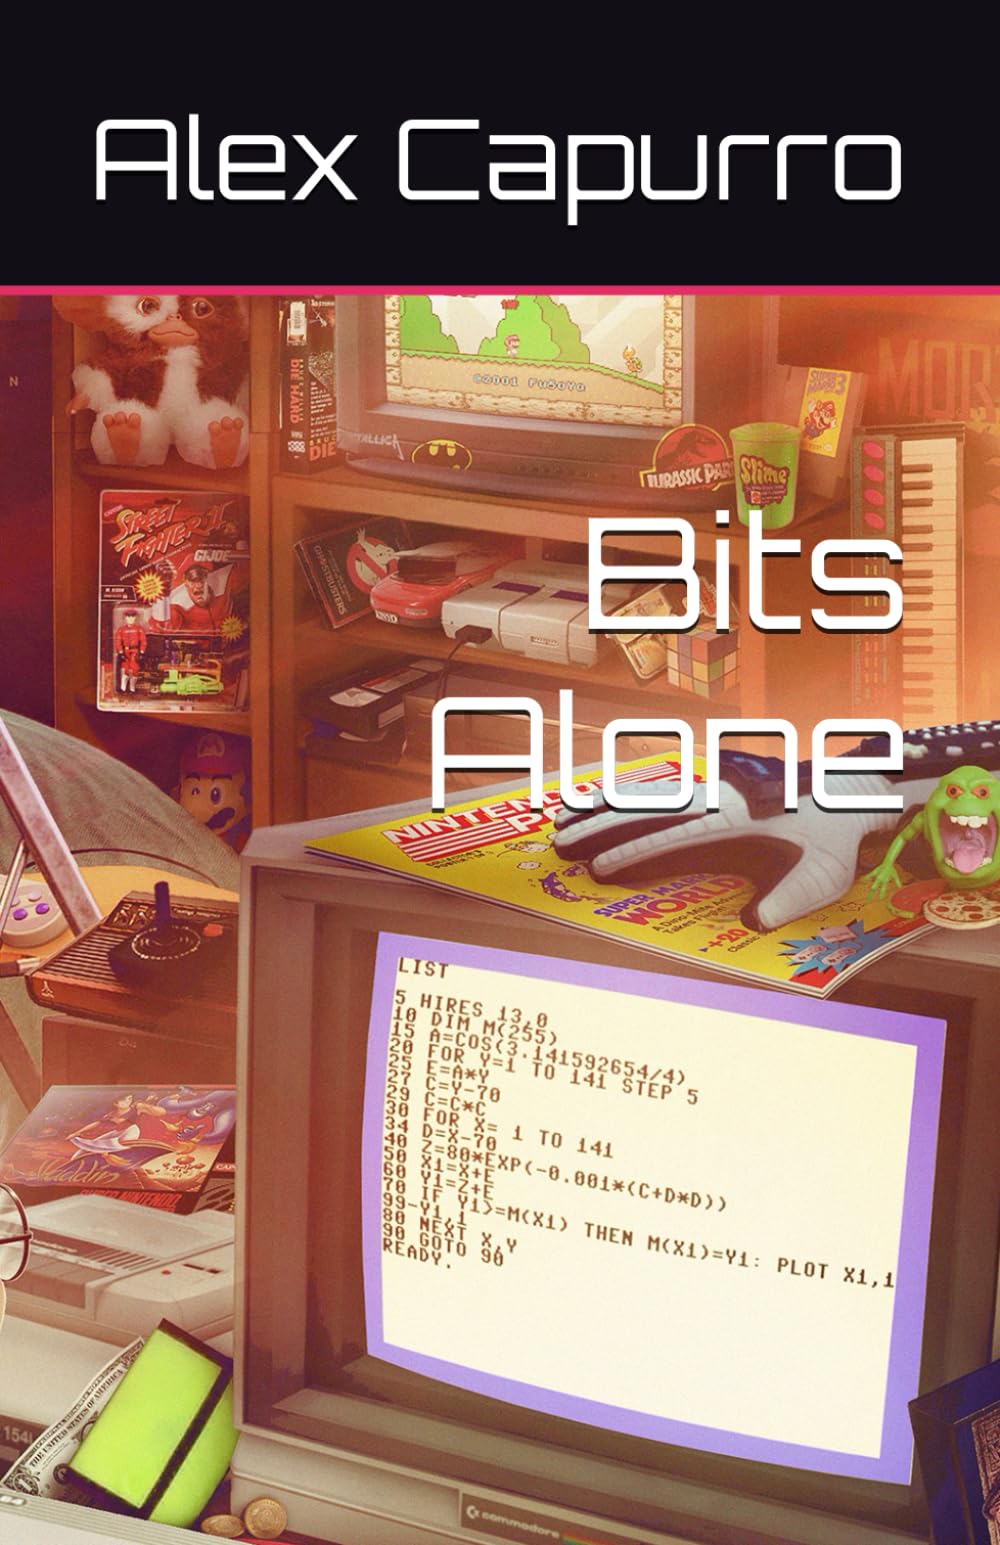 Bits Alone